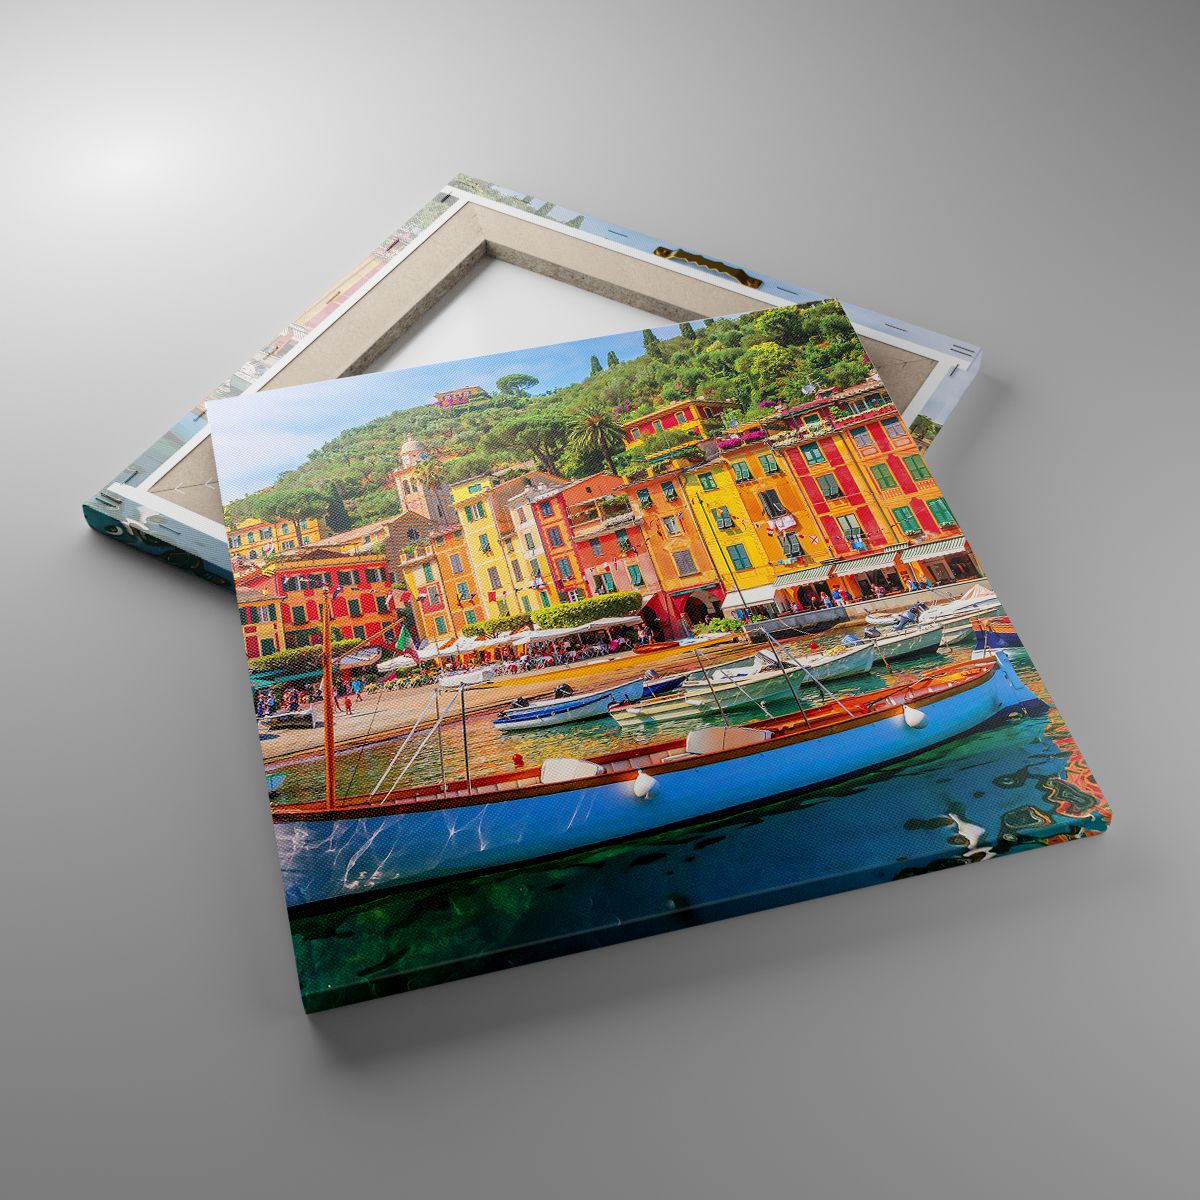 Obrazy Architektura, Obrazy Portofino, Obrazy Włochy, Obrazy Łodzie, Obrazy Podróże